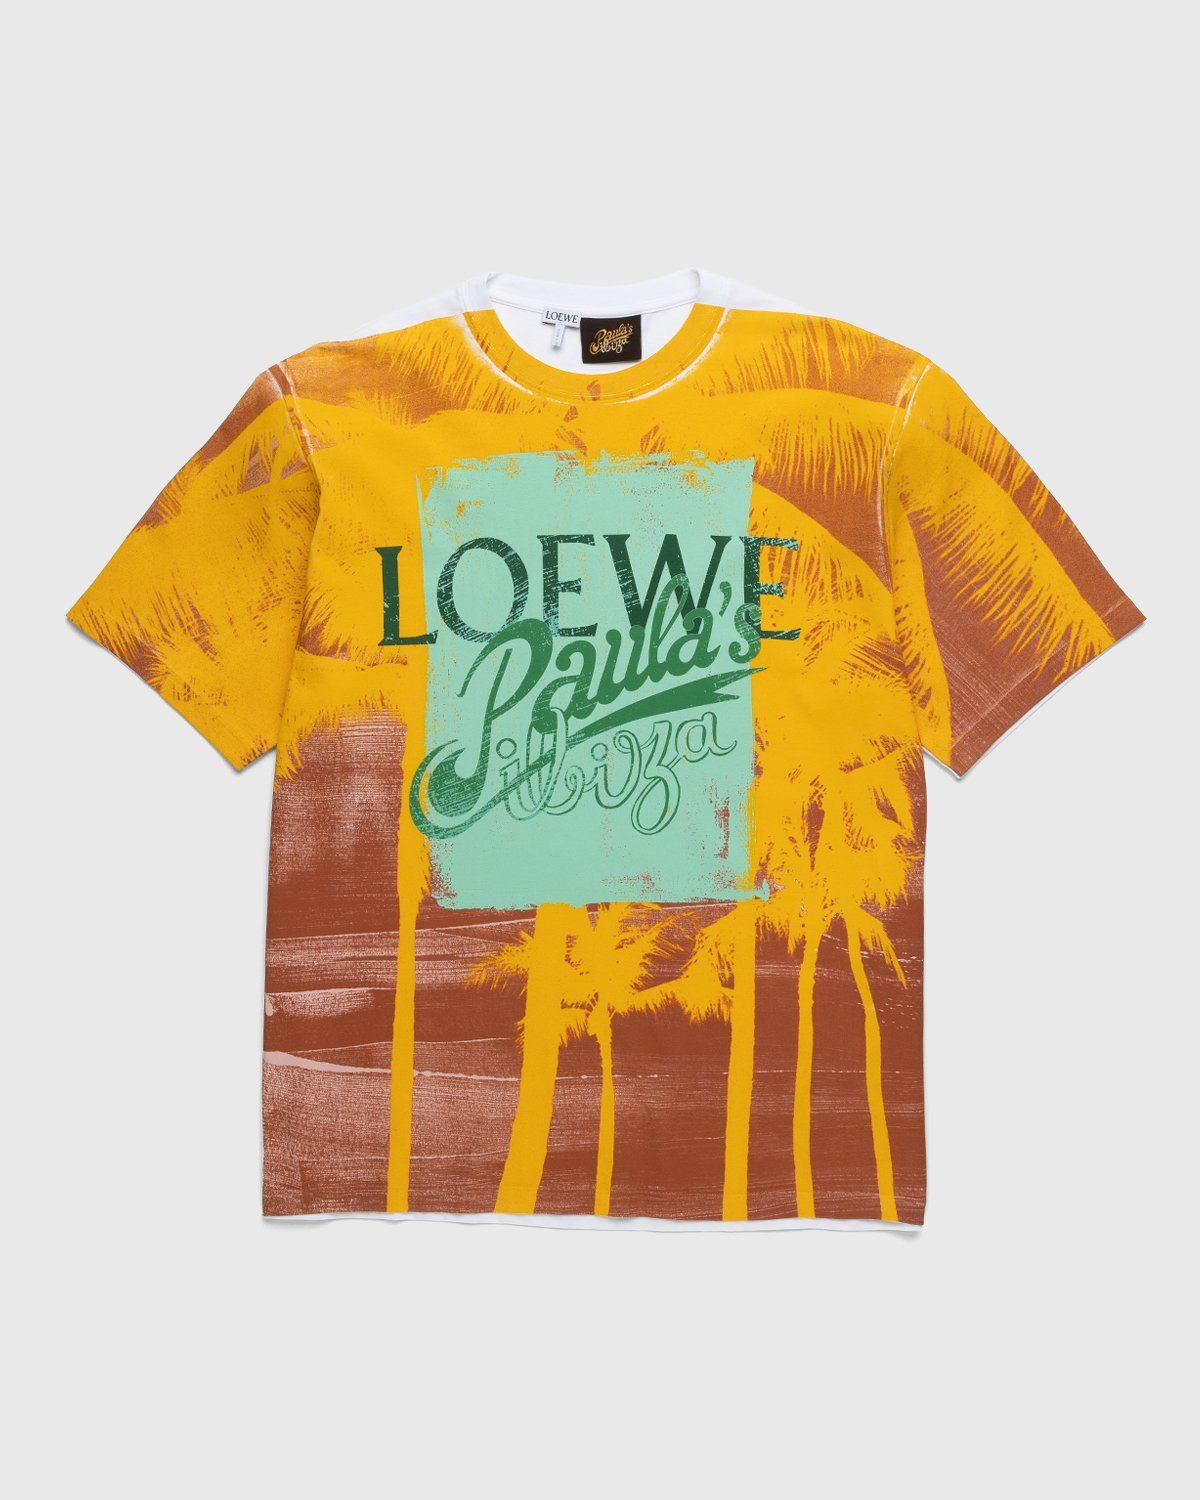 Loewe – Paula's Ibiza Palm Print T-Shirt White/Multi - Tops - Multi - Image 1